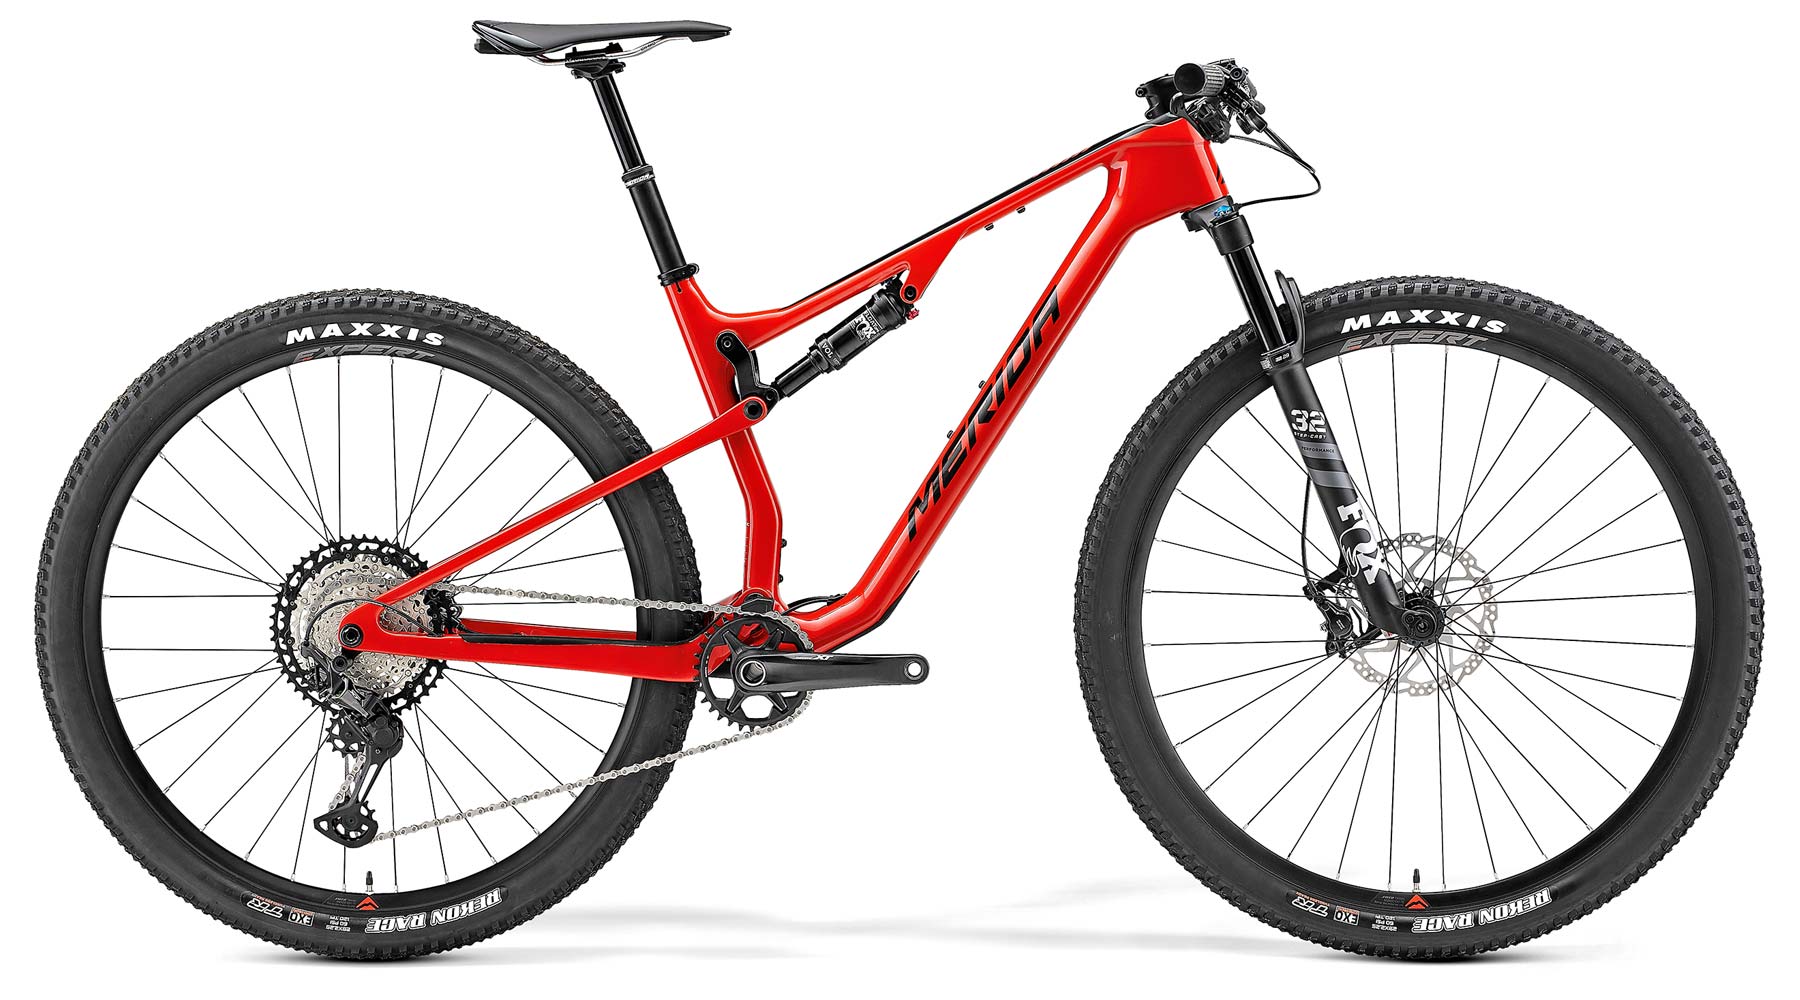 2021 Merida Ninety-Six XC mountain bike, lightweight carbon cross-country race OR light trail mountain bike, XT complete